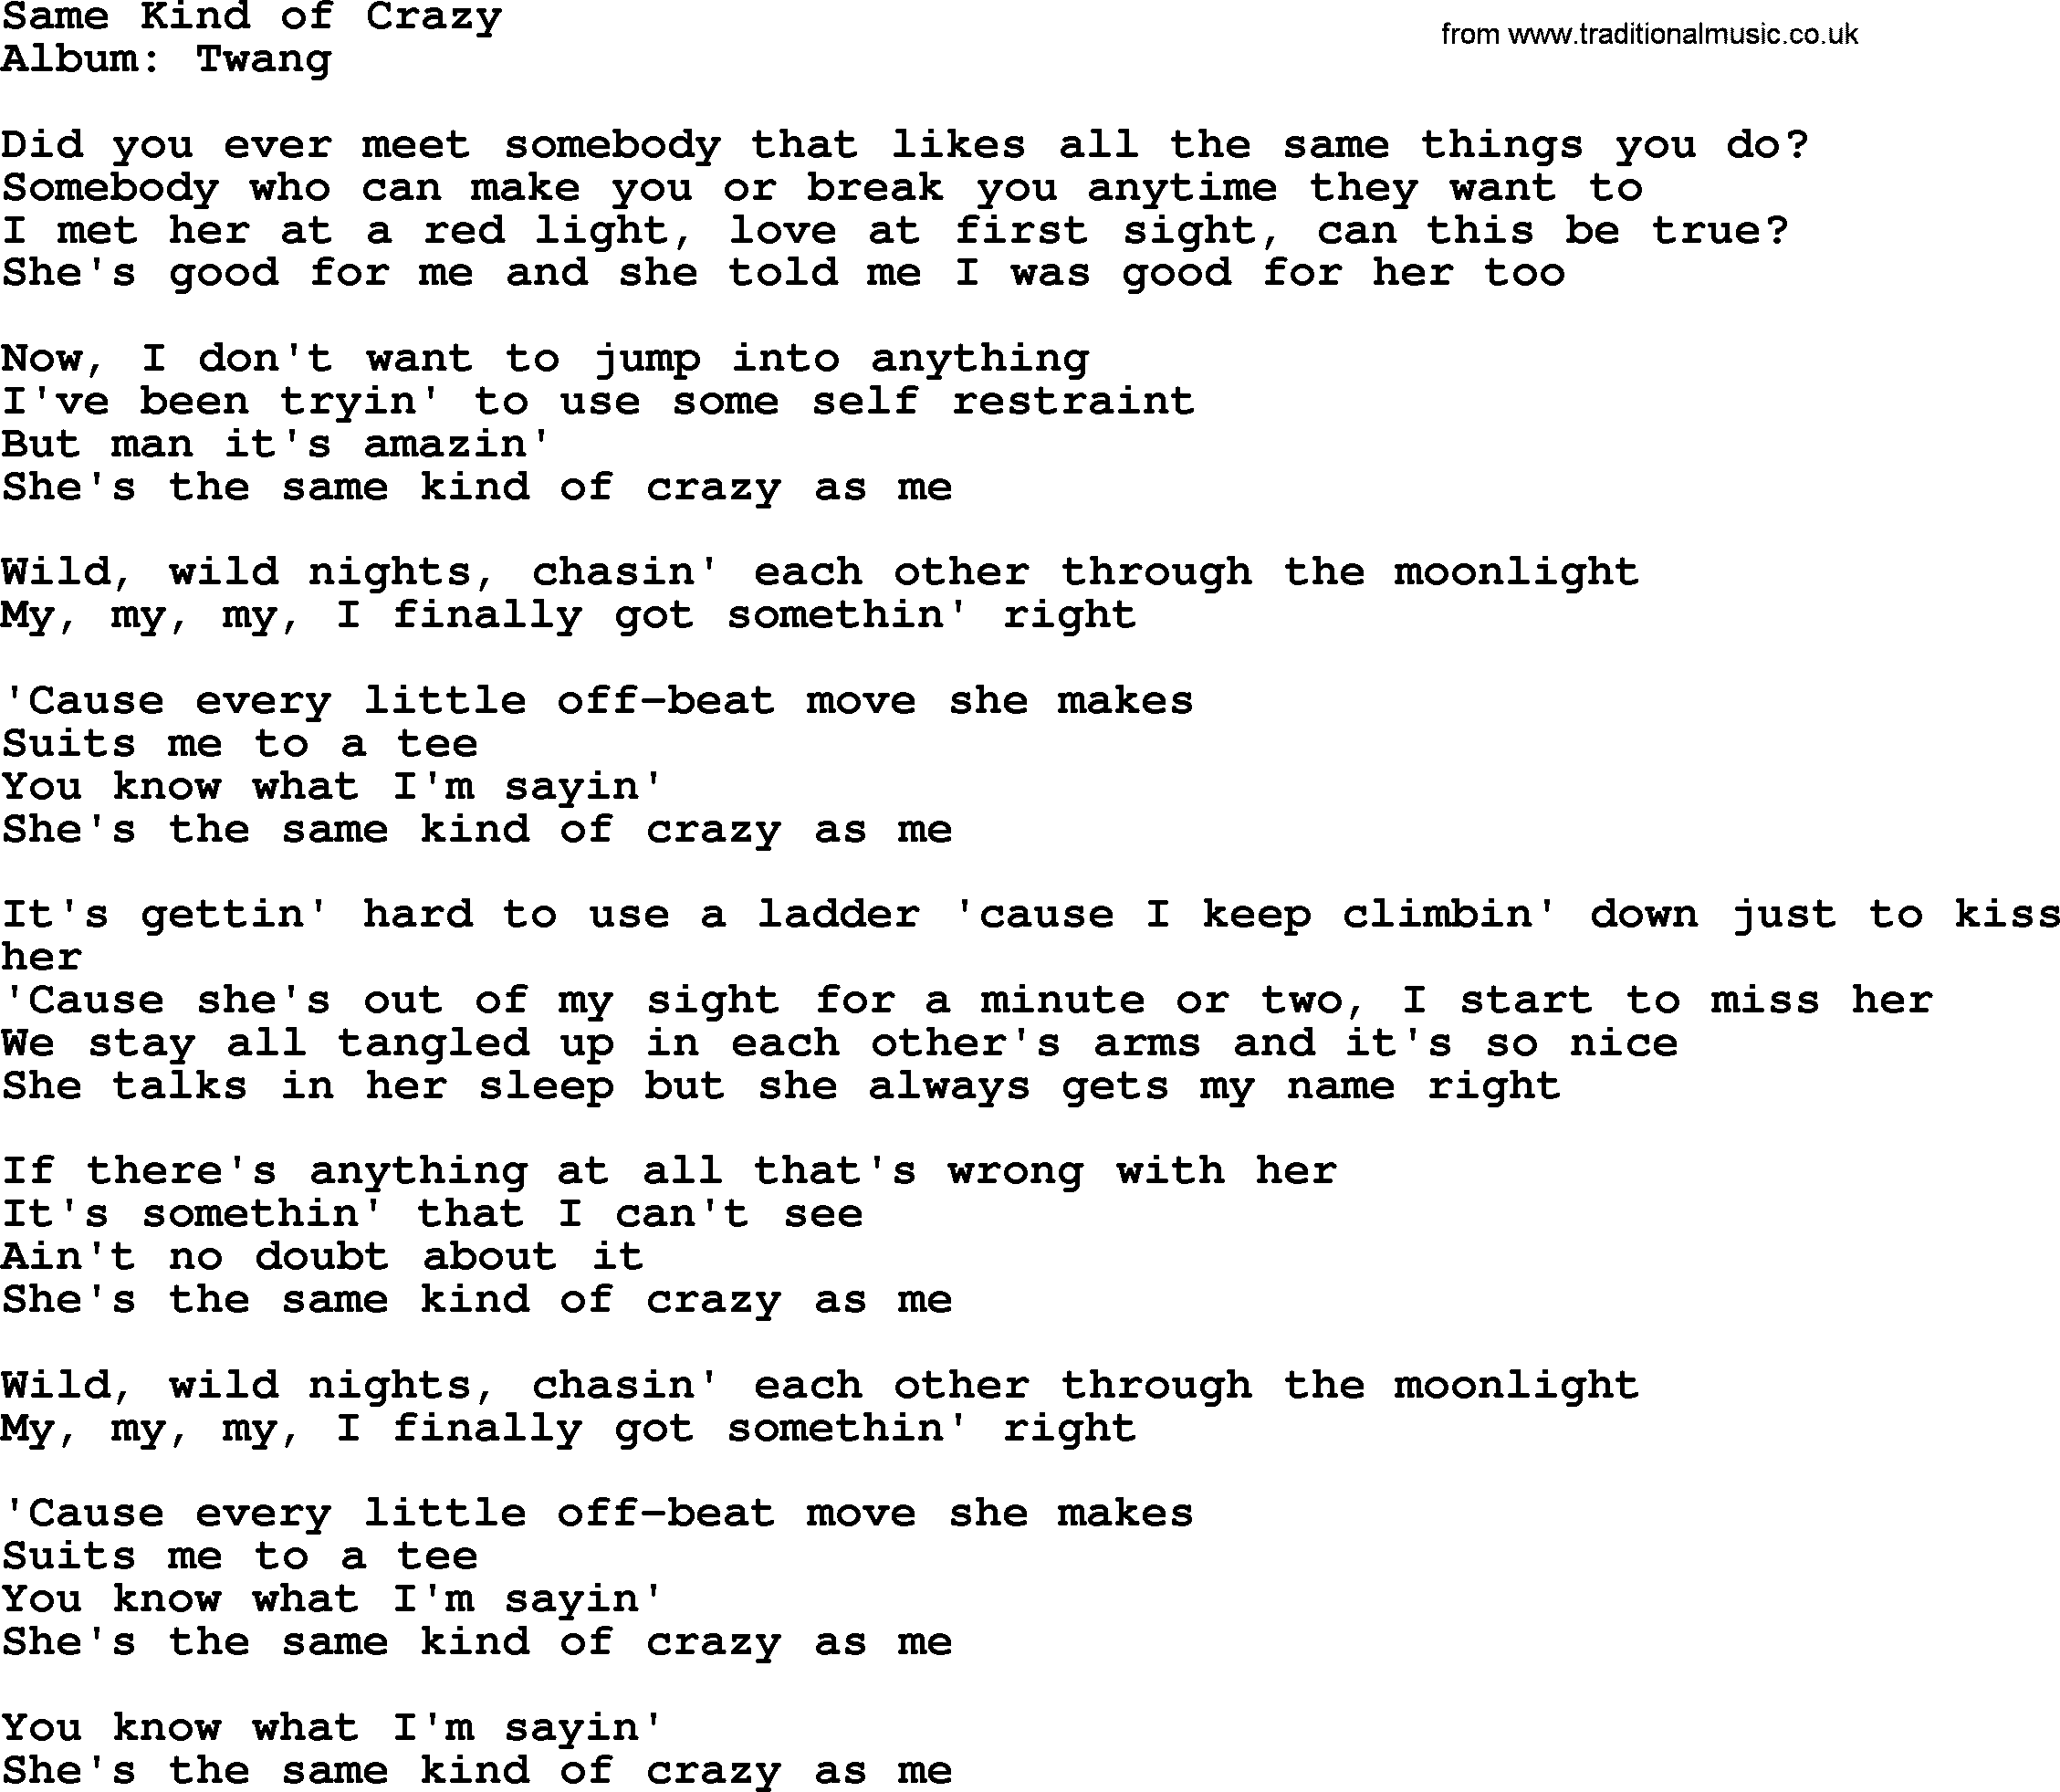 George Strait song: Same Kind of Crazy, lyrics